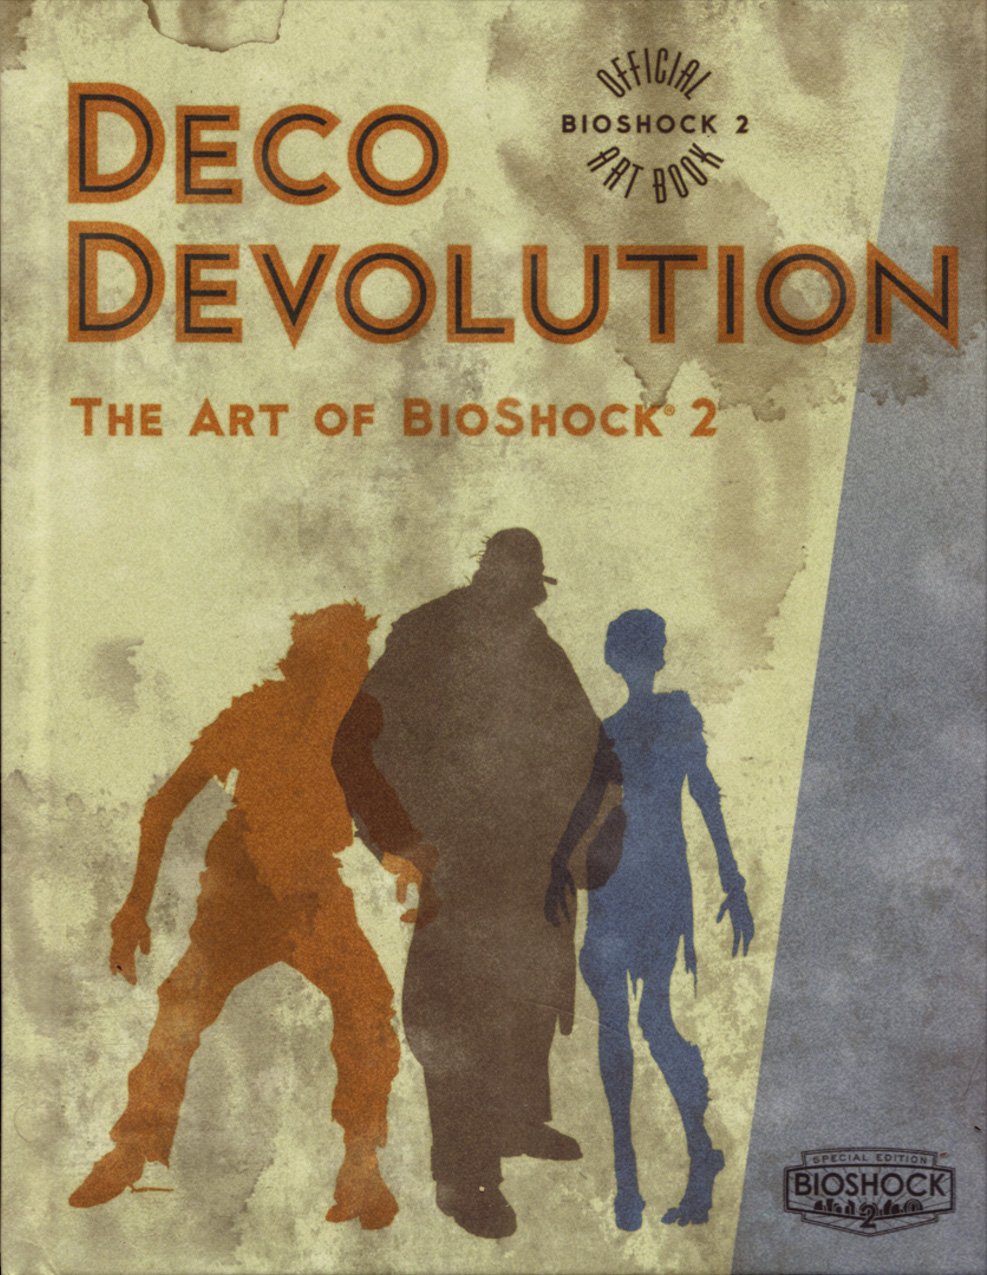 Bioshock Deco Devolution The Art of Bioshock 2 Art and Reference